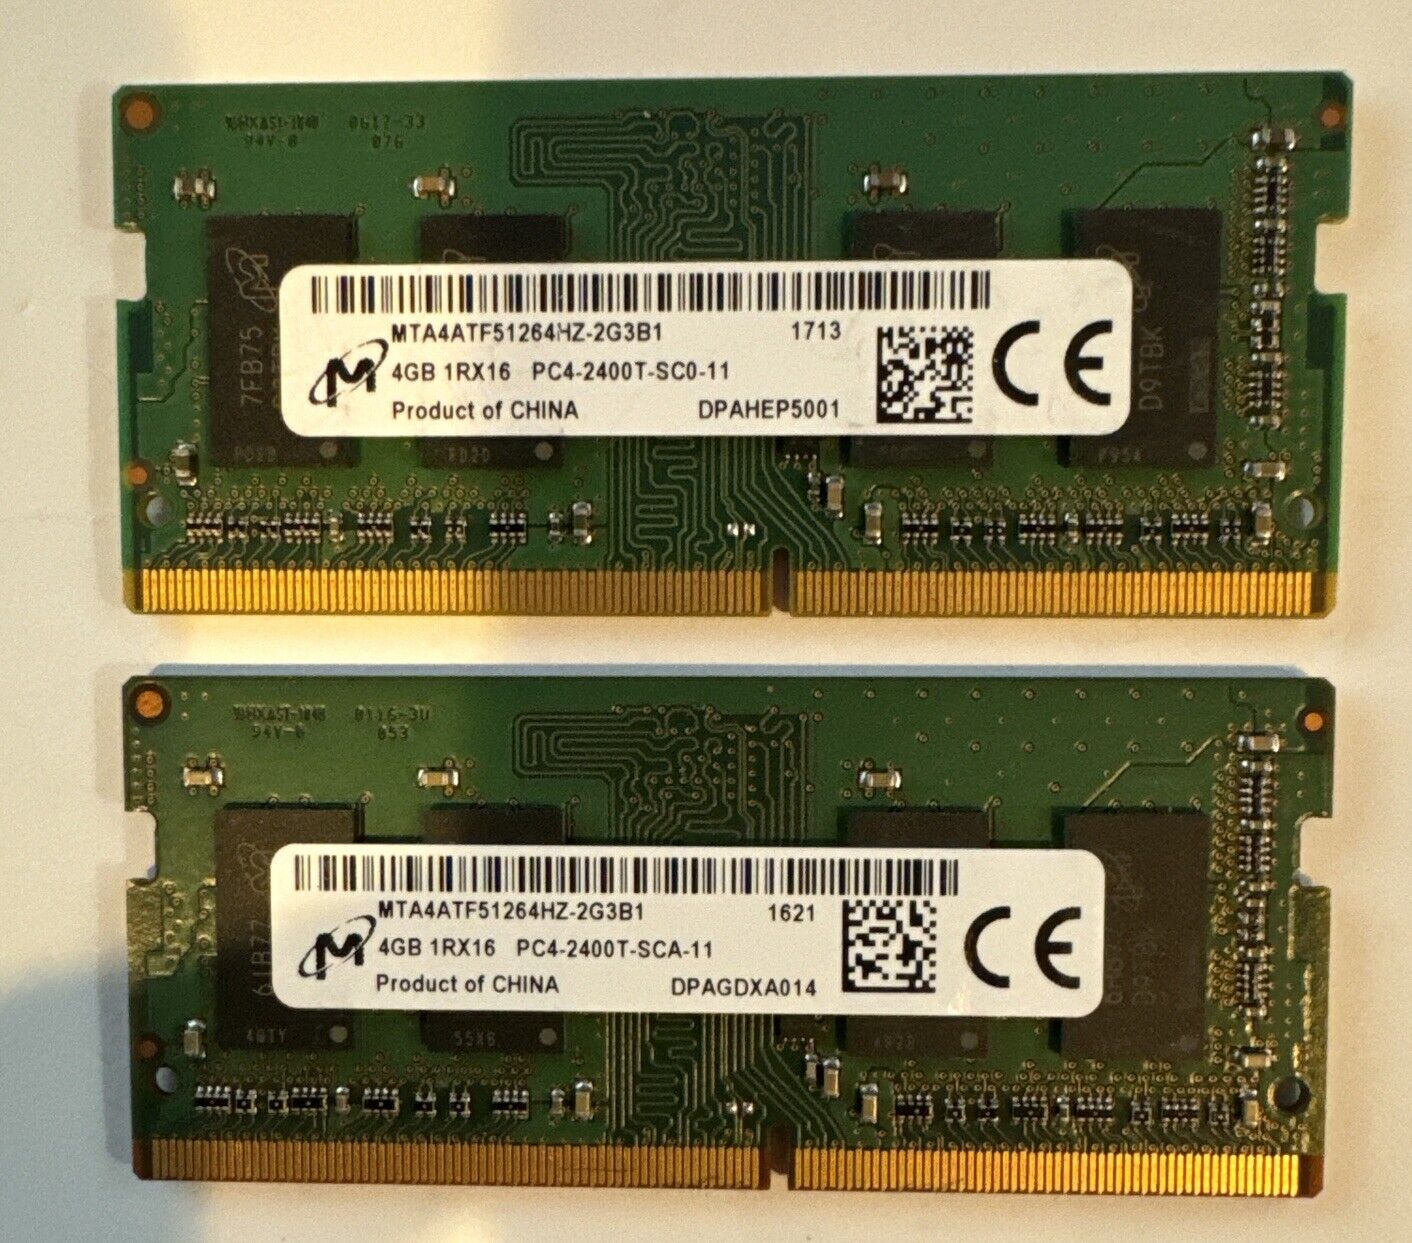 Micron 8GB RAM Kit - 1RX16 - PC4 2400T (2) 4GB Memory Sticks